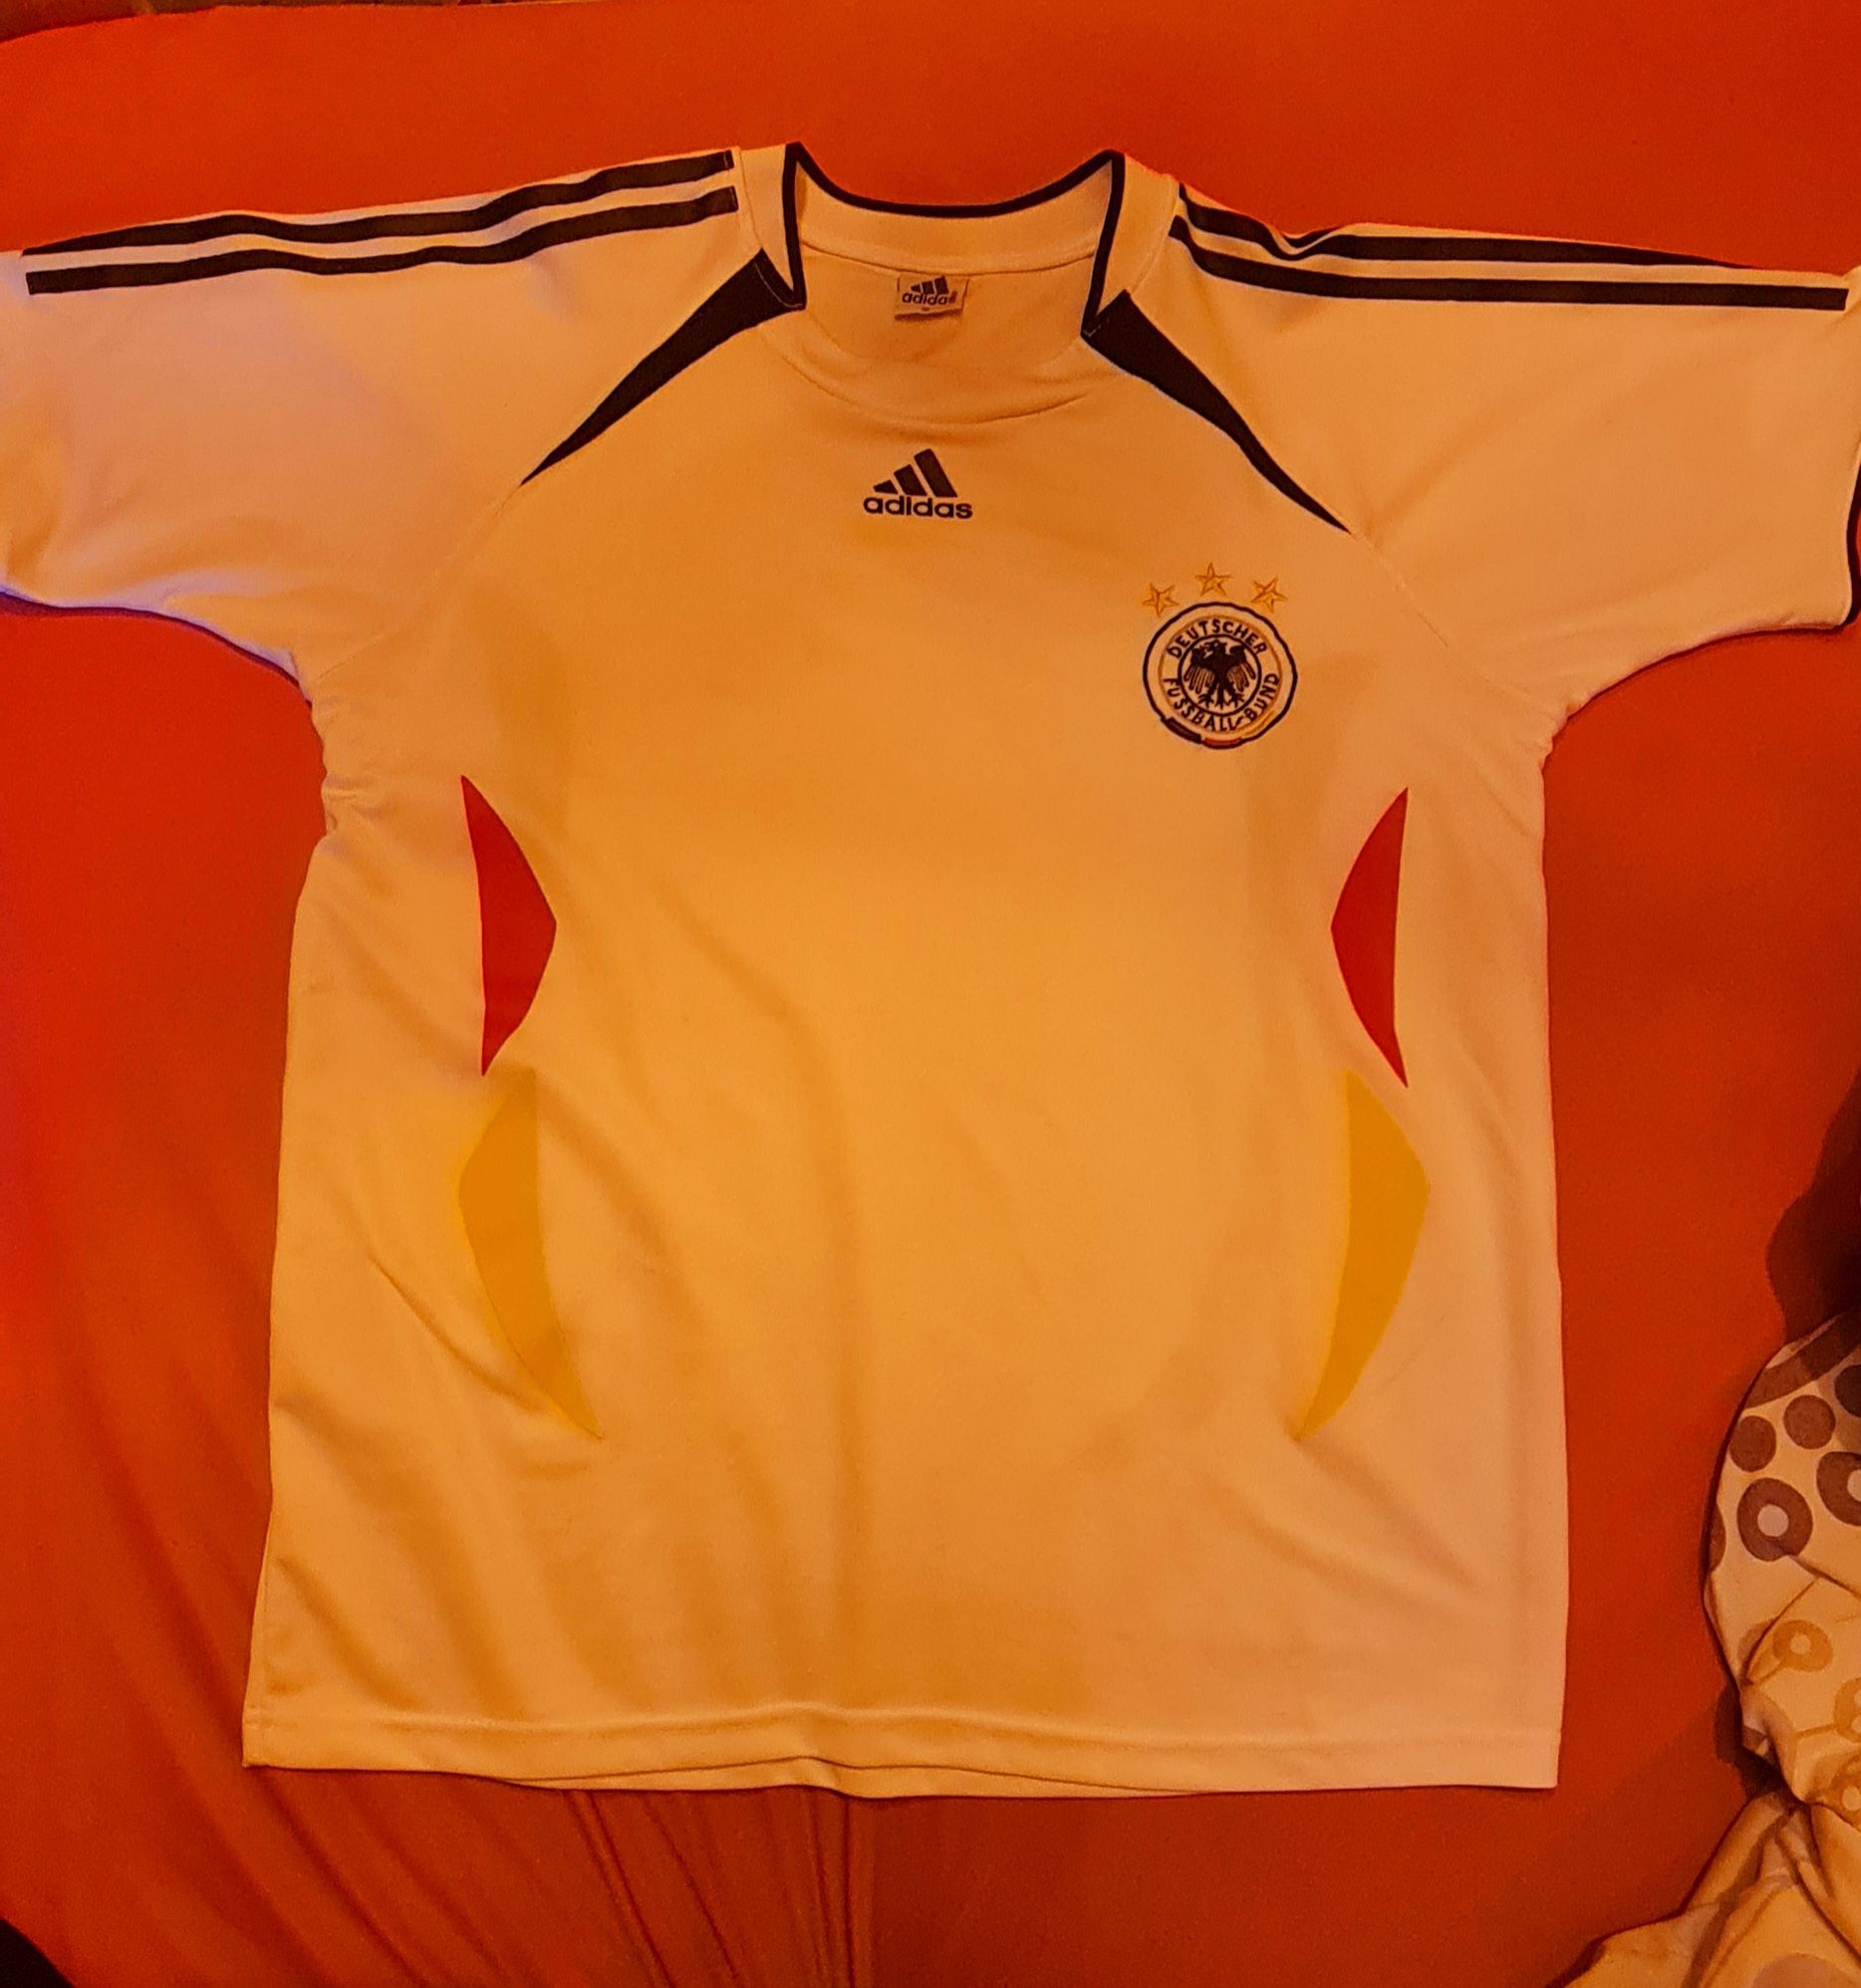 Koszulka piłkarska reprezentacji Niemiec marki Adidas.